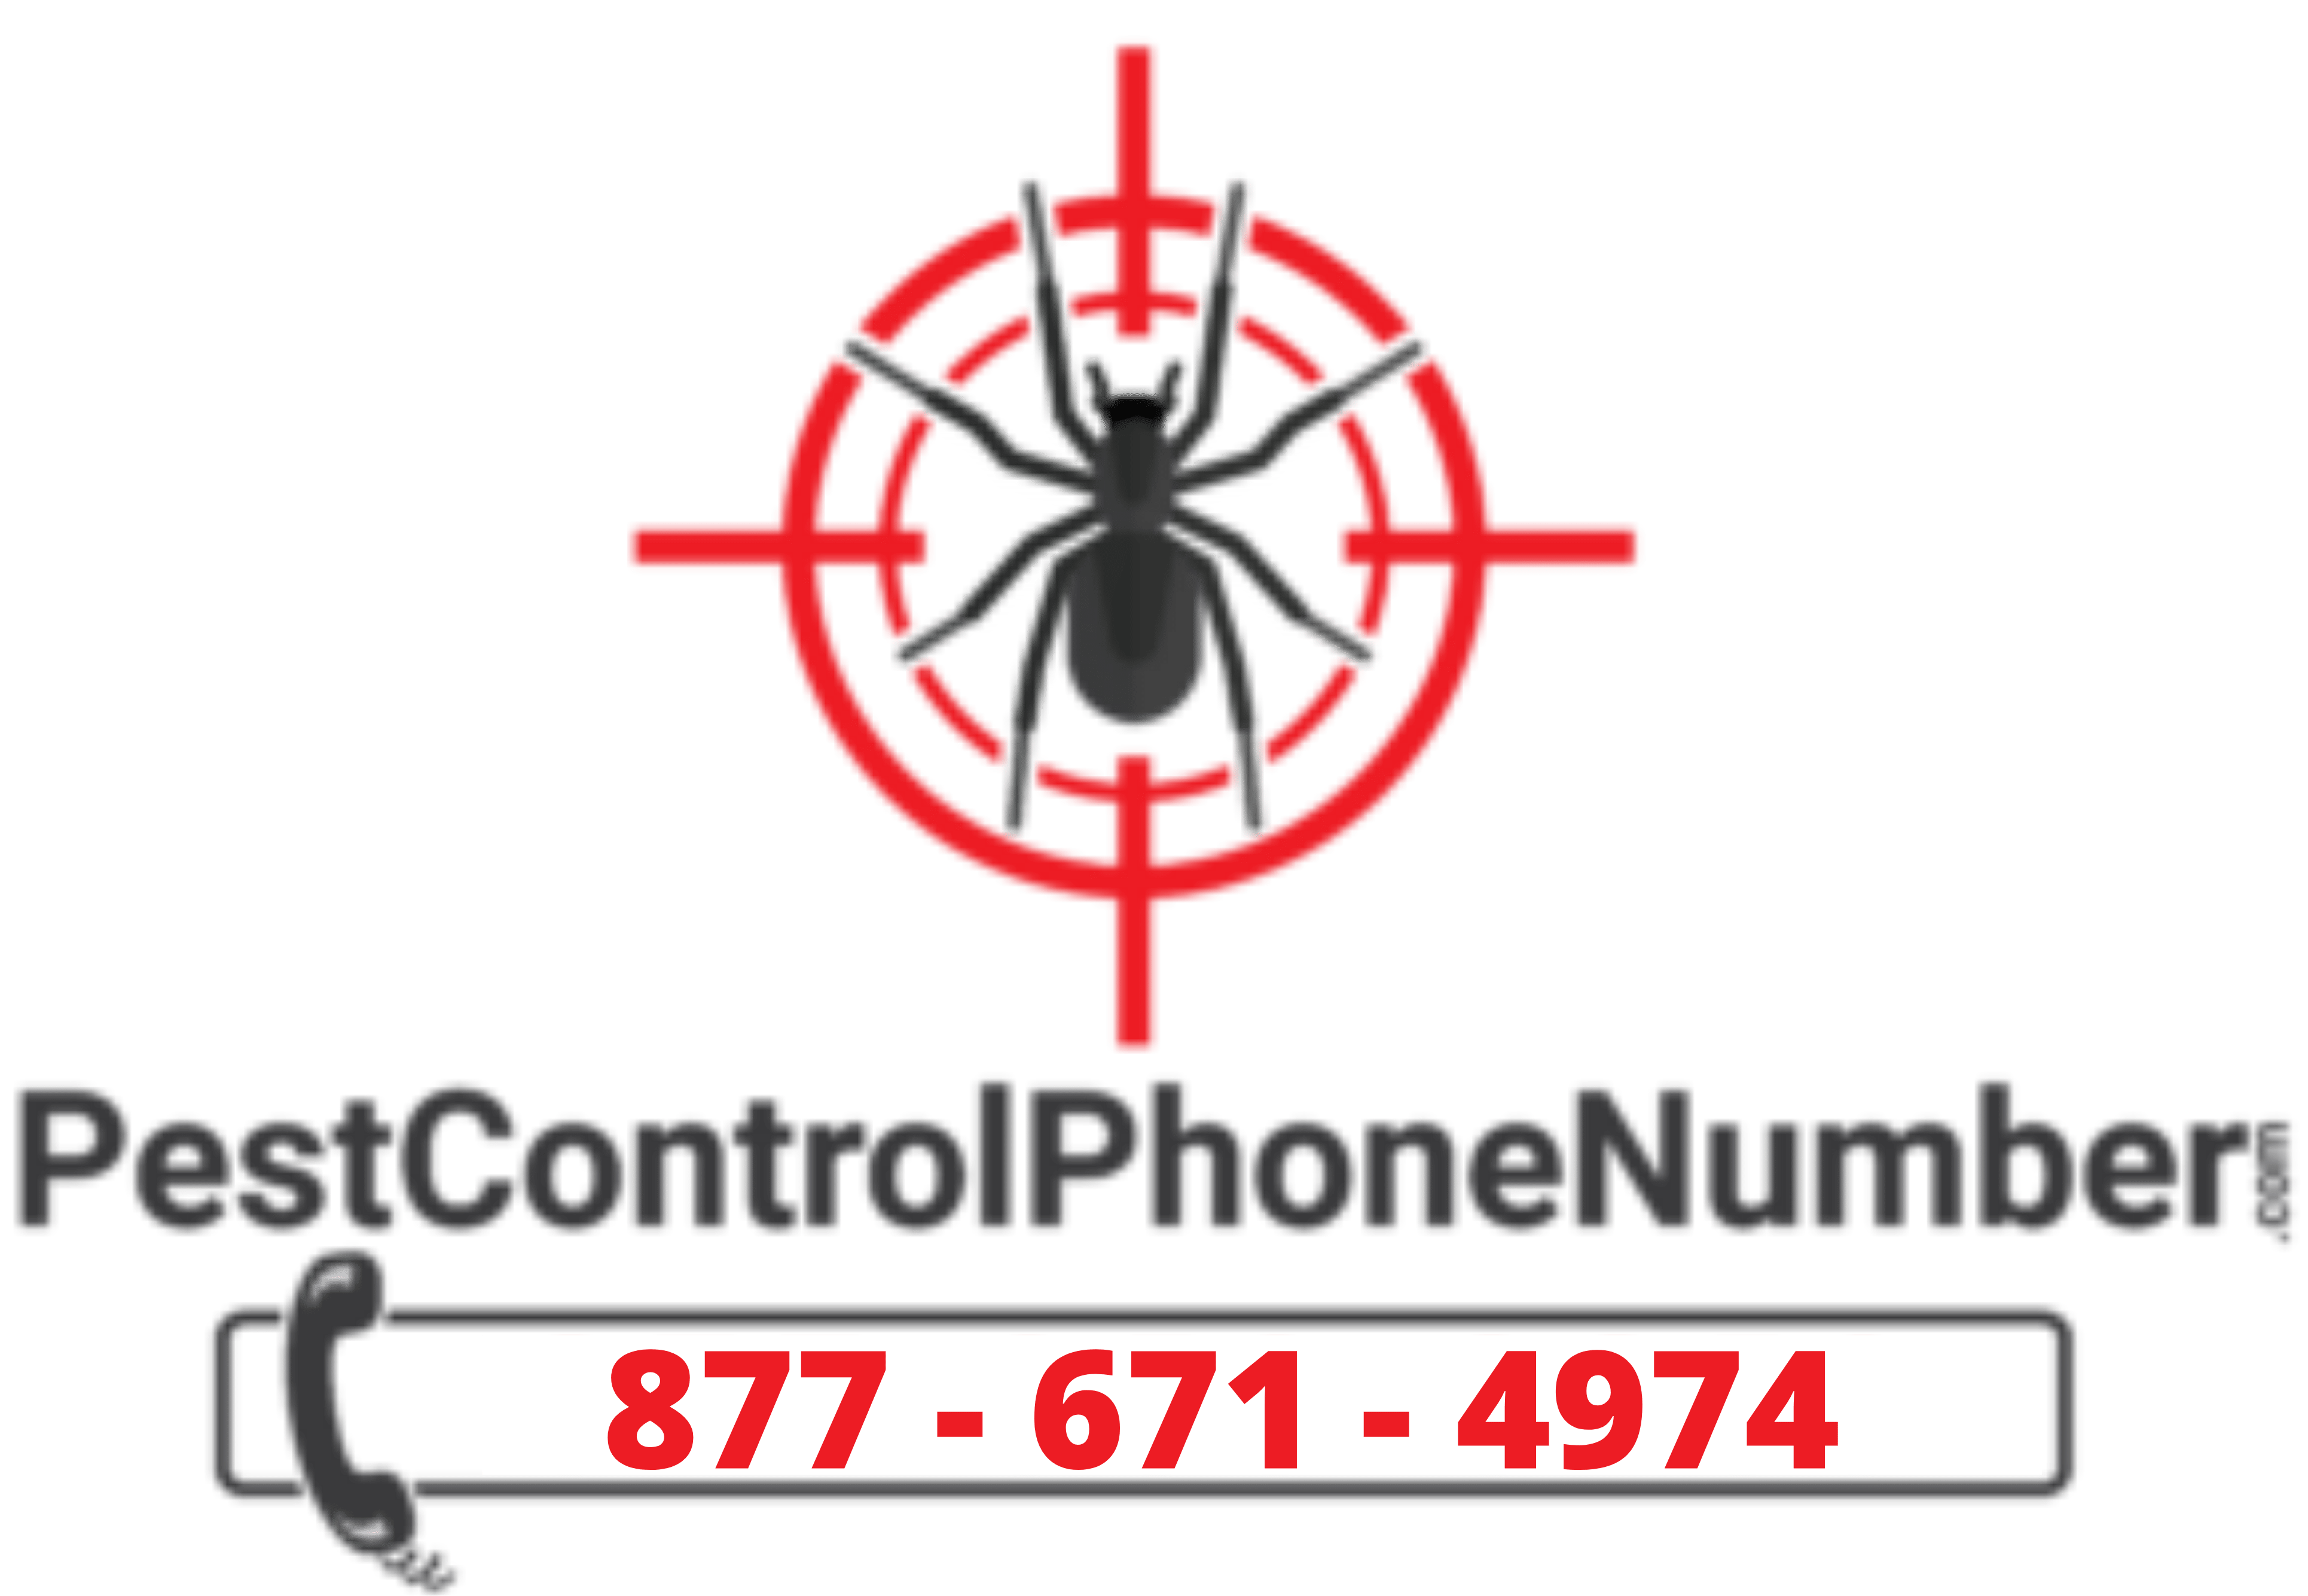 Pest Control Phone Number